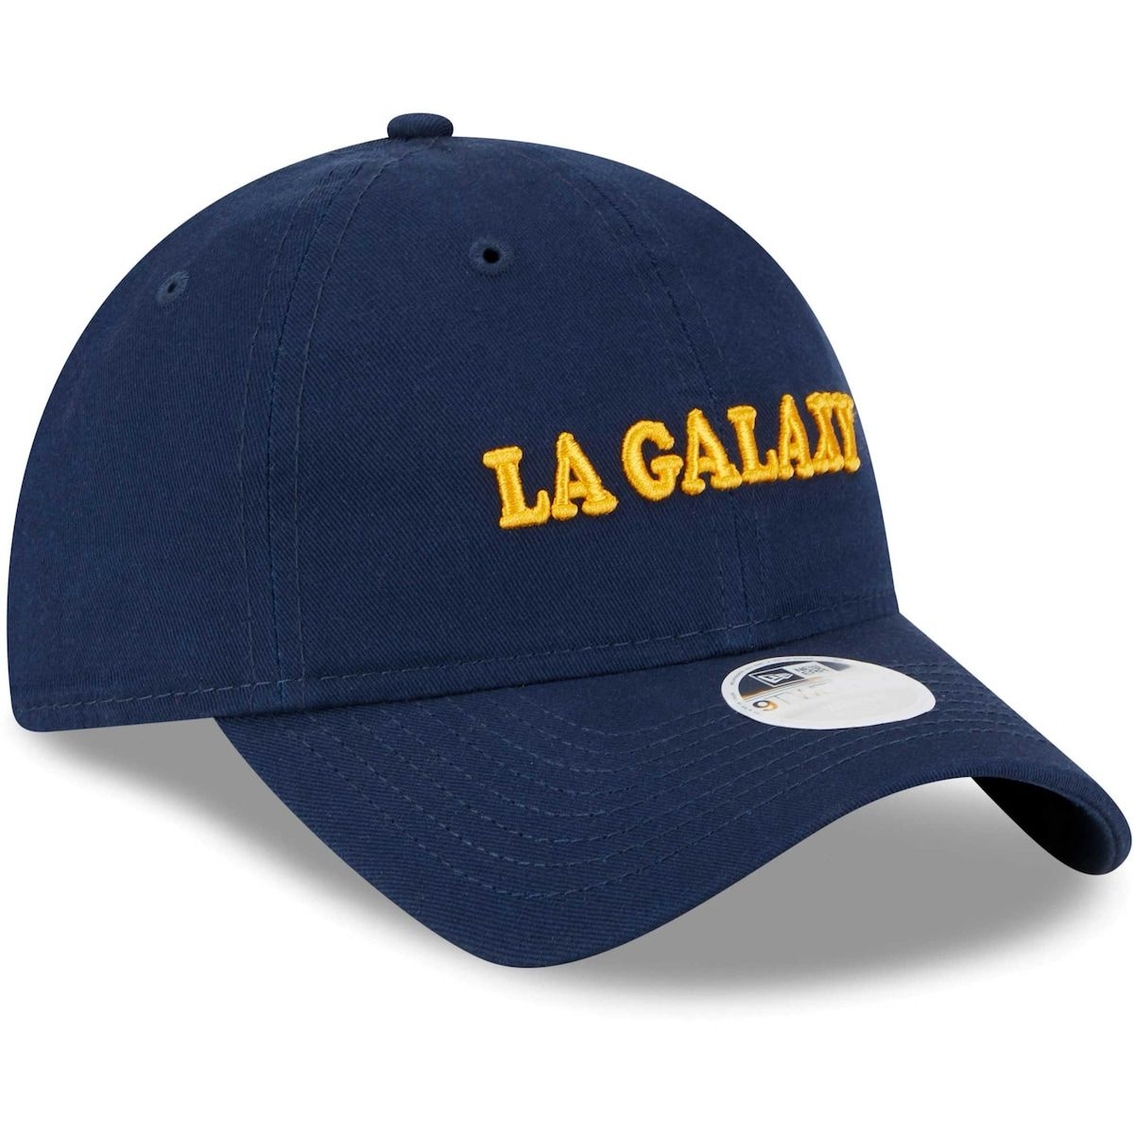 New Era Women's Navy LA Galaxy Shoutout 9TWENTY Adjustable Hat - Image 4 of 4